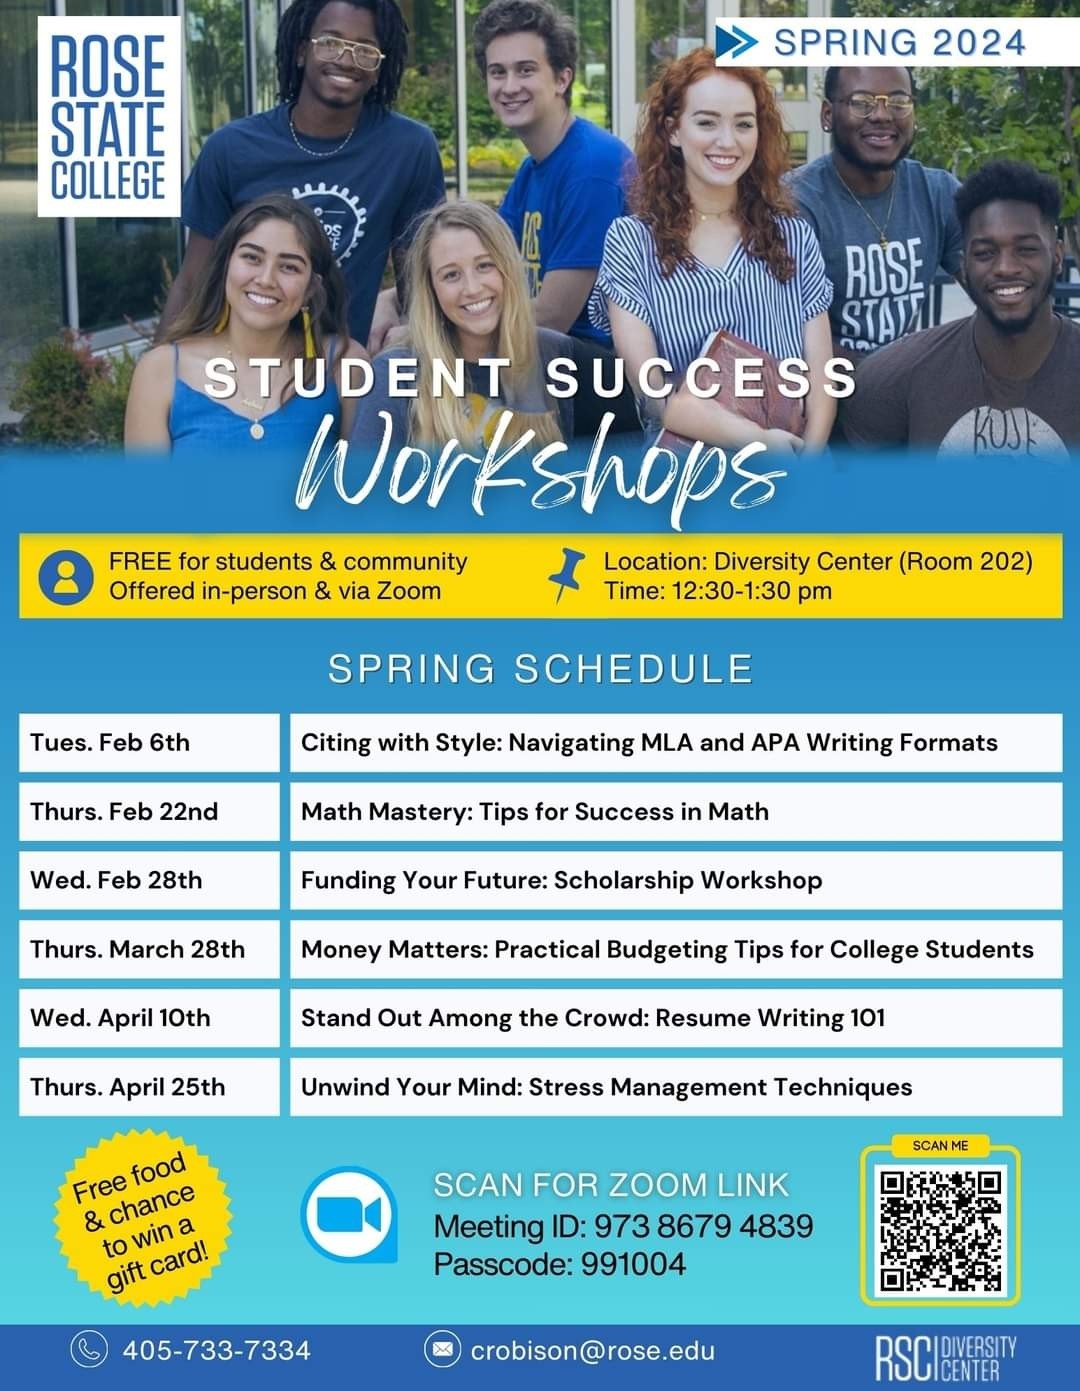 Student Success Workshops